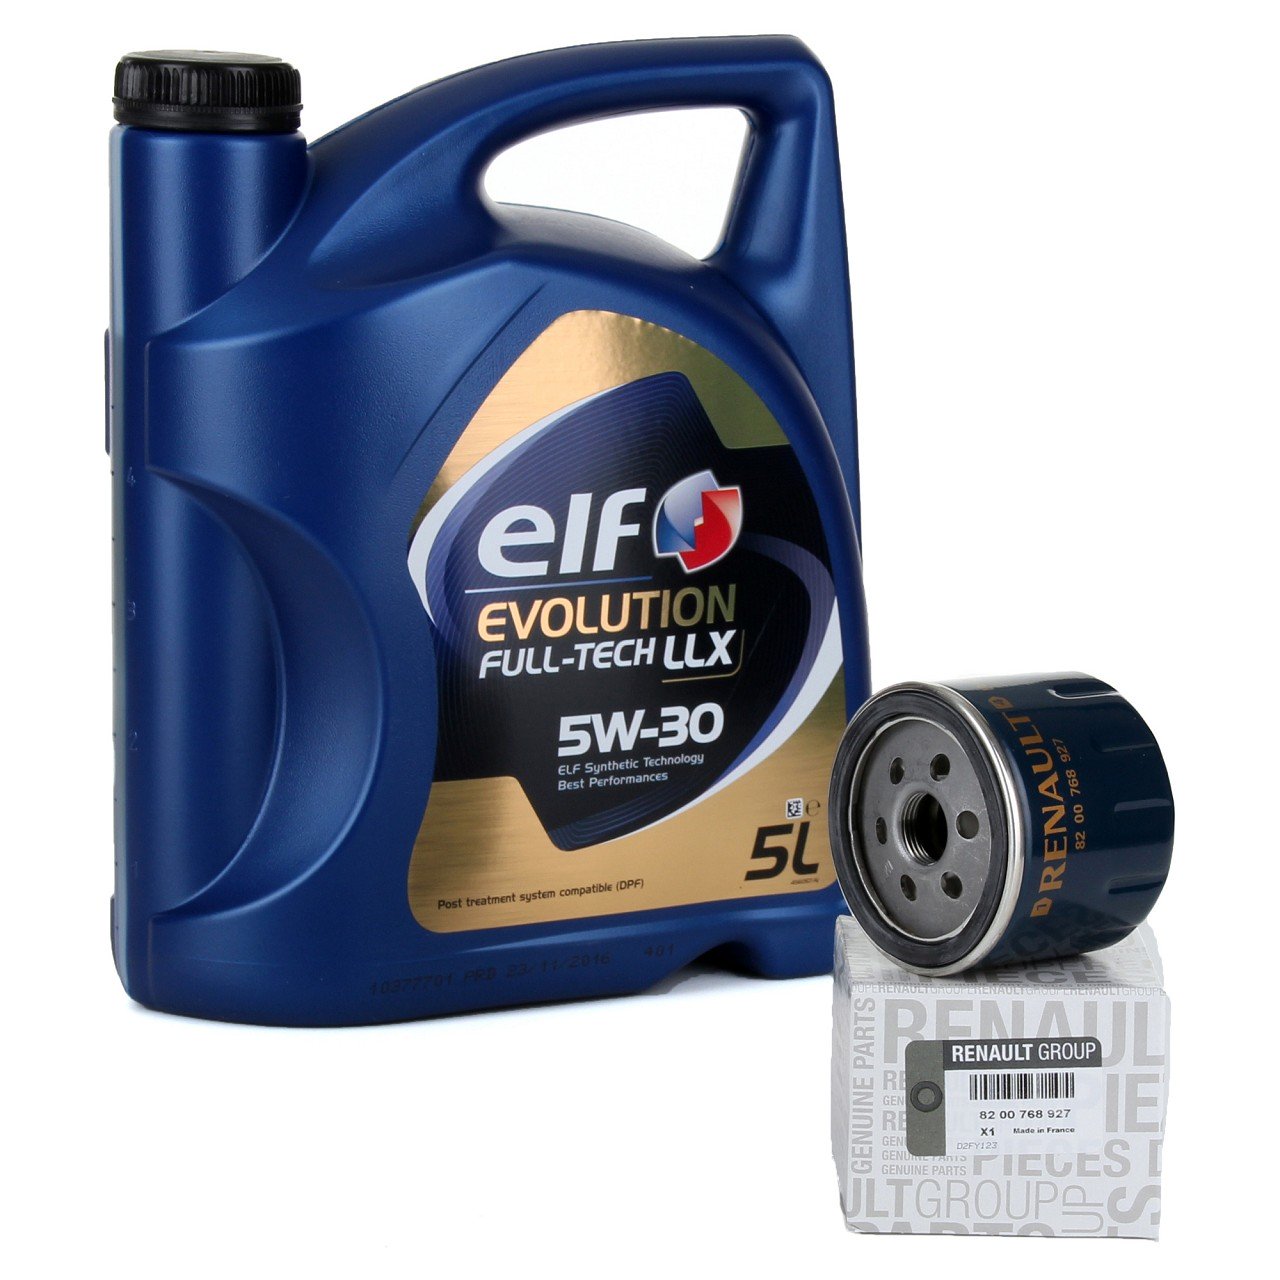 elf Evolution Full-Tech LLX 5W-30 Motoröl 5 Liter + ORIGINAL Ölfilter 8200768927